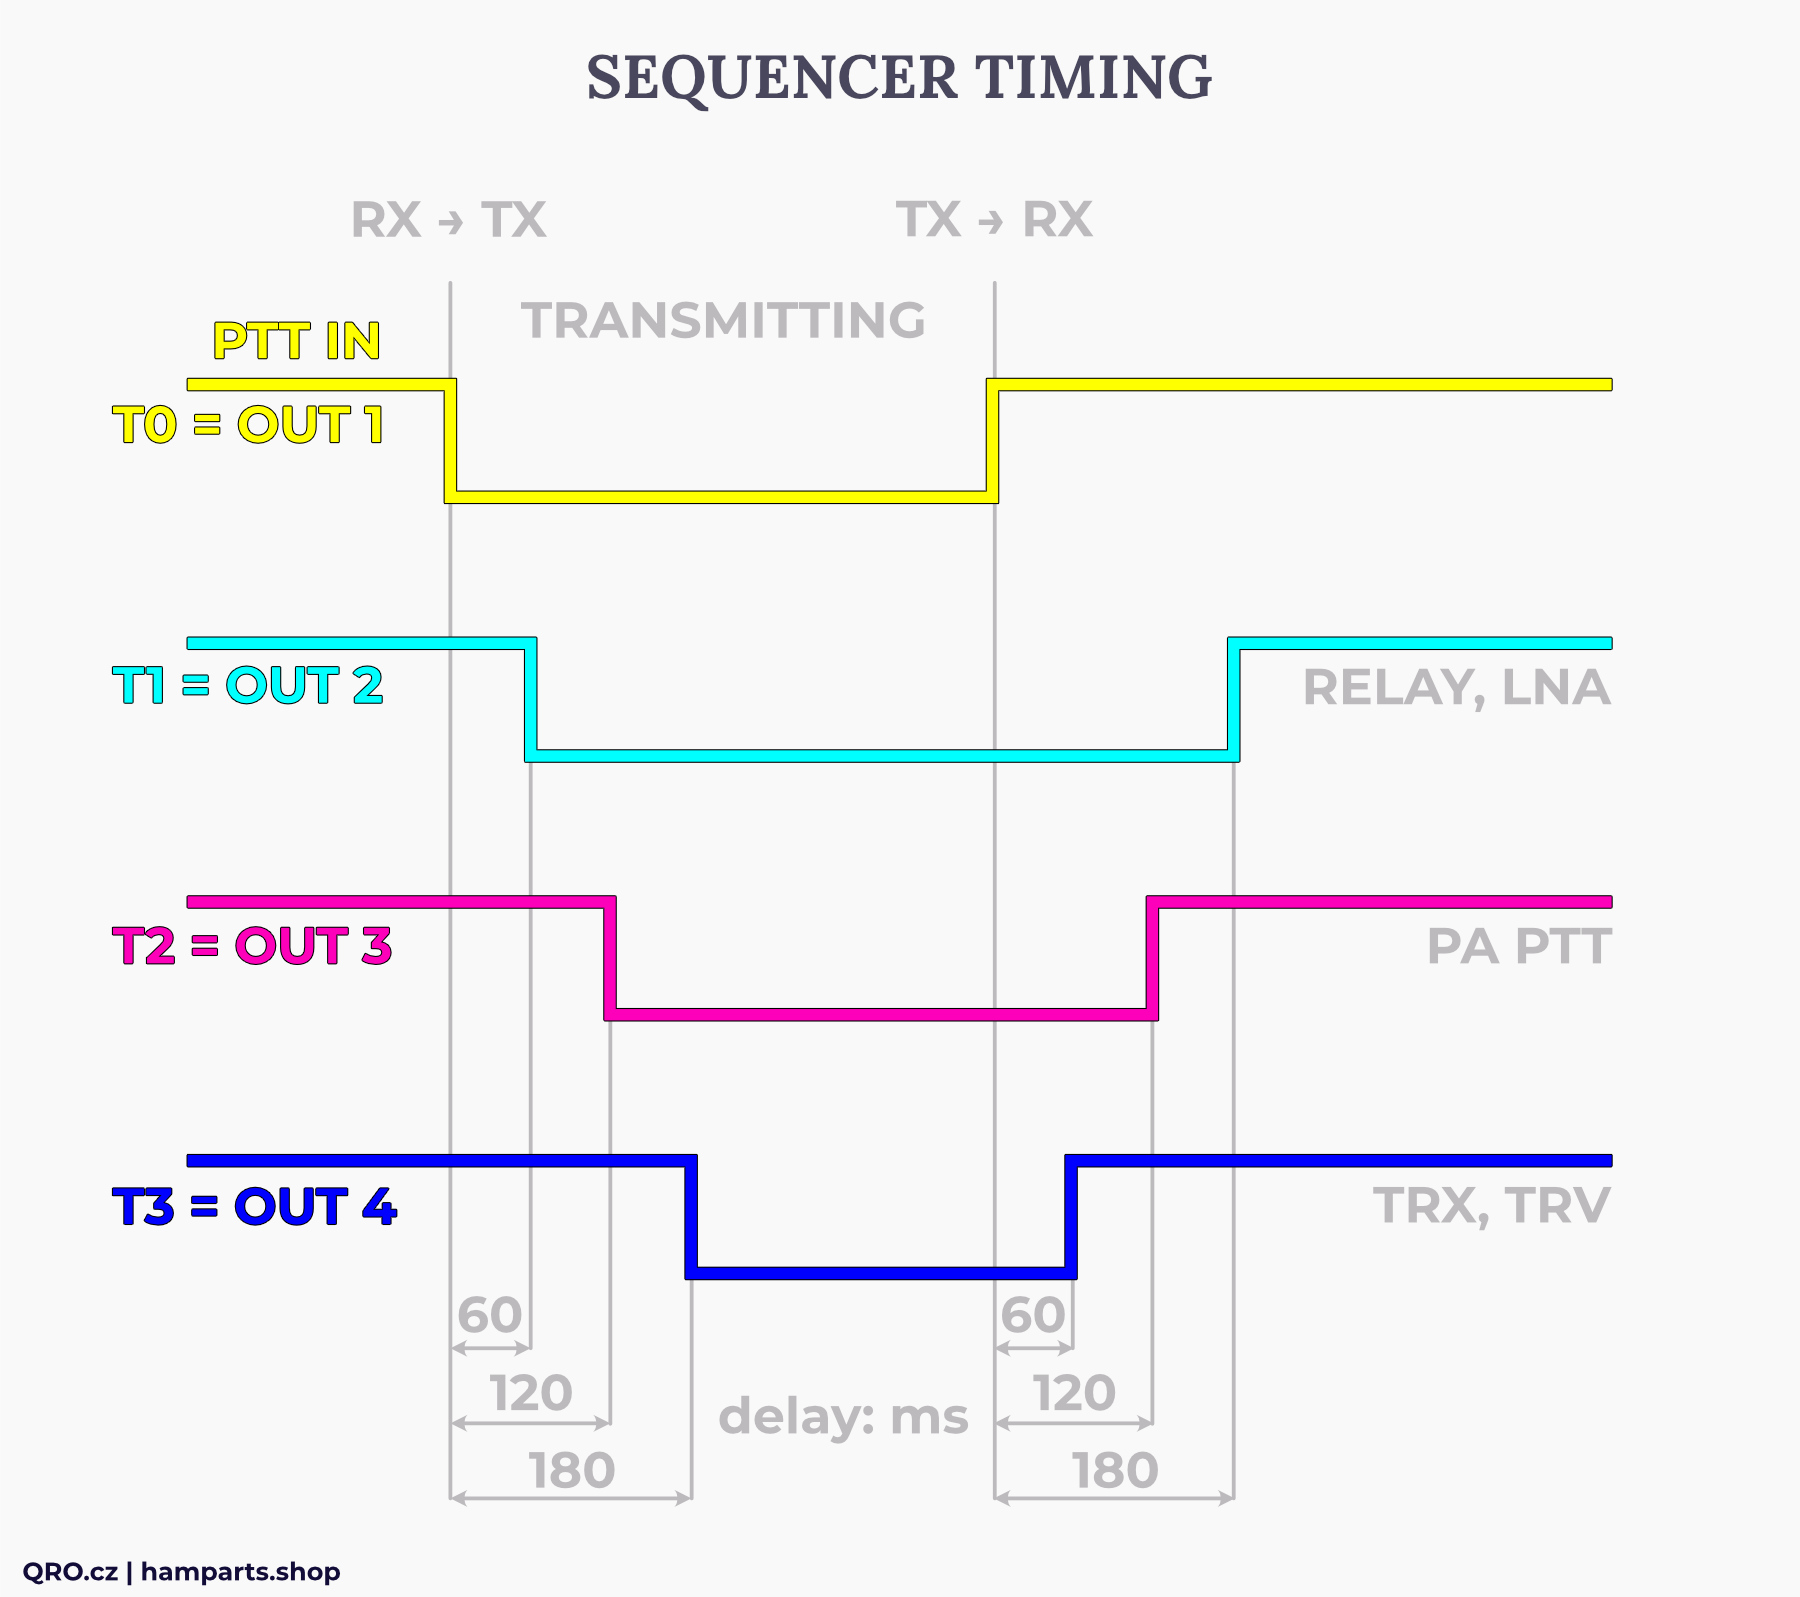 4-way ptt sequencer timing qro.cz hamparts.shop